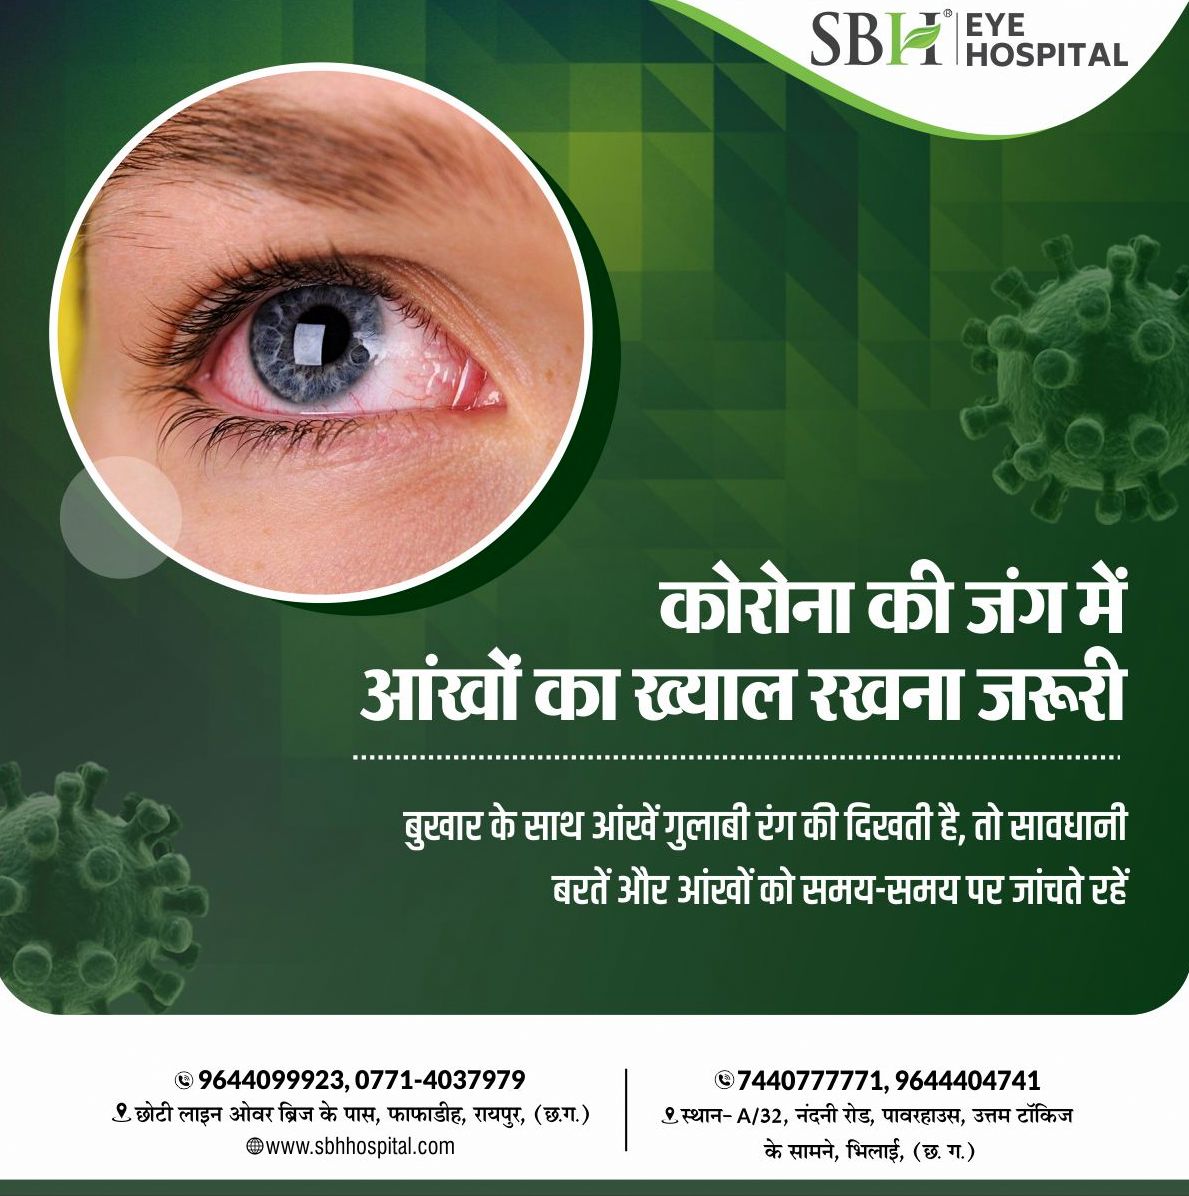 Sai Baba Eye Hospital|Diagnostic centre|Medical Services